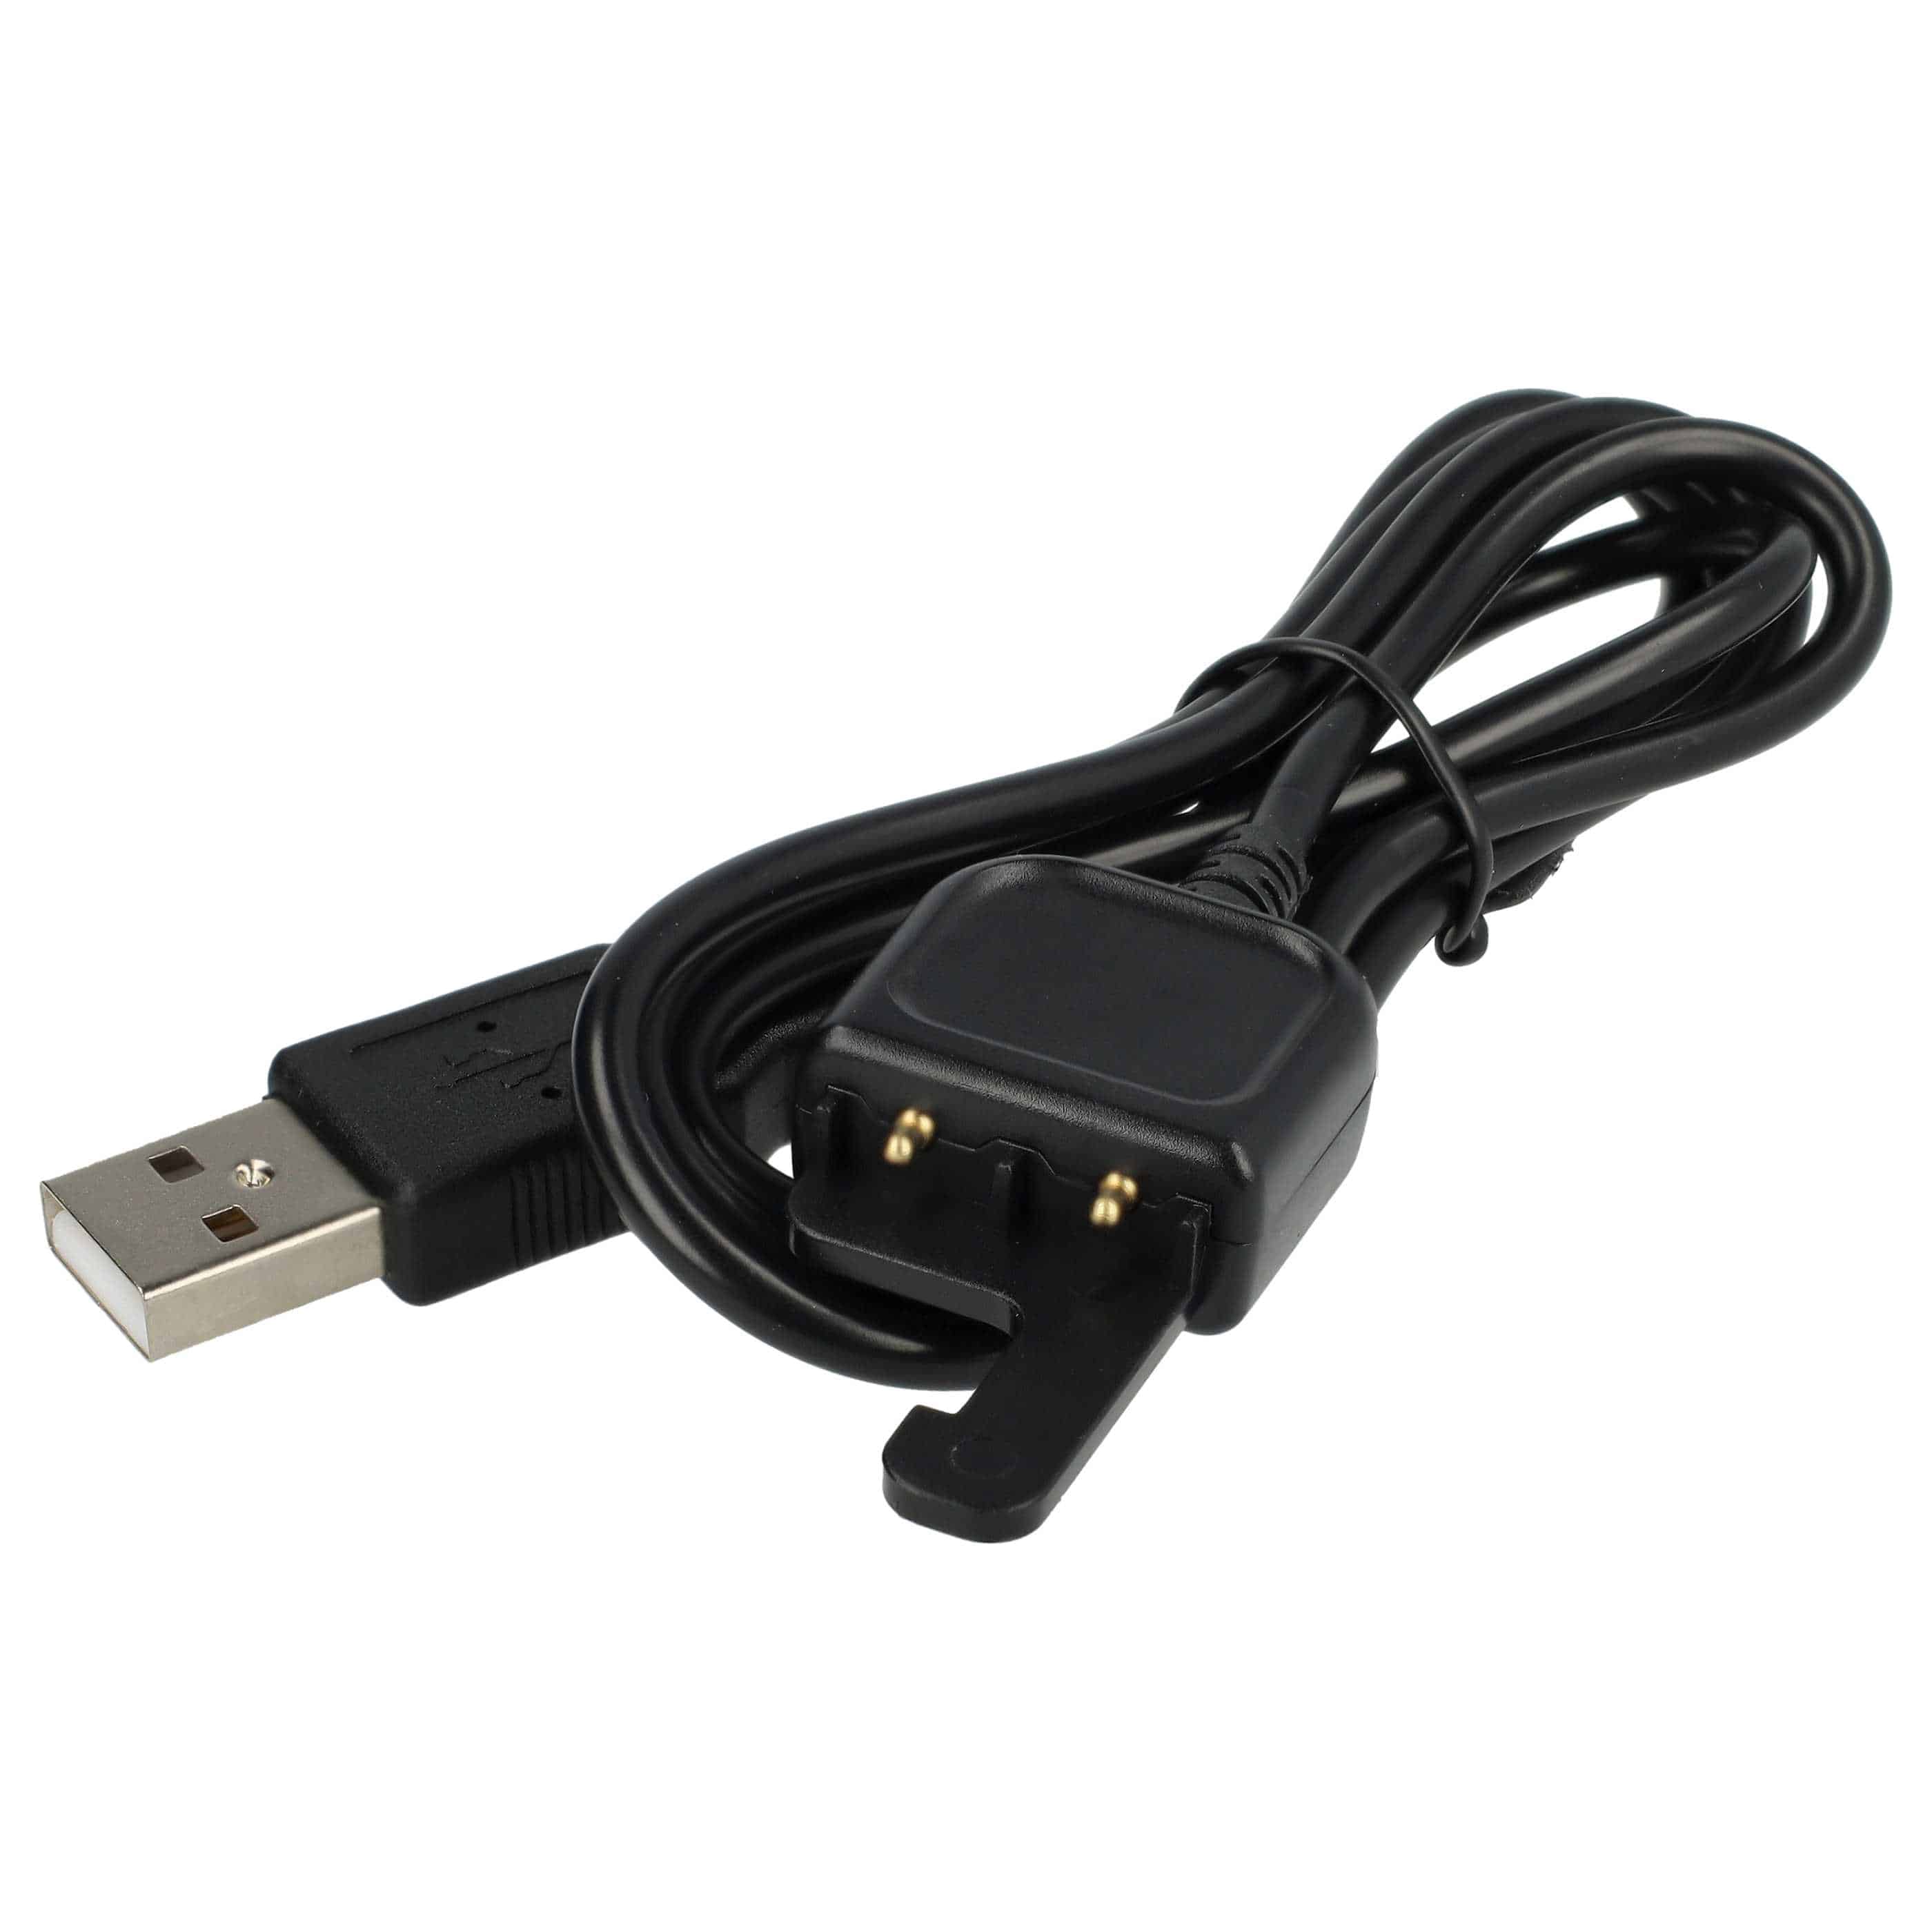 Cavo USB sostituisce AWRCC-001 per telecomando actioncam GoPro - cavo di ricarica, 50 cm, nero